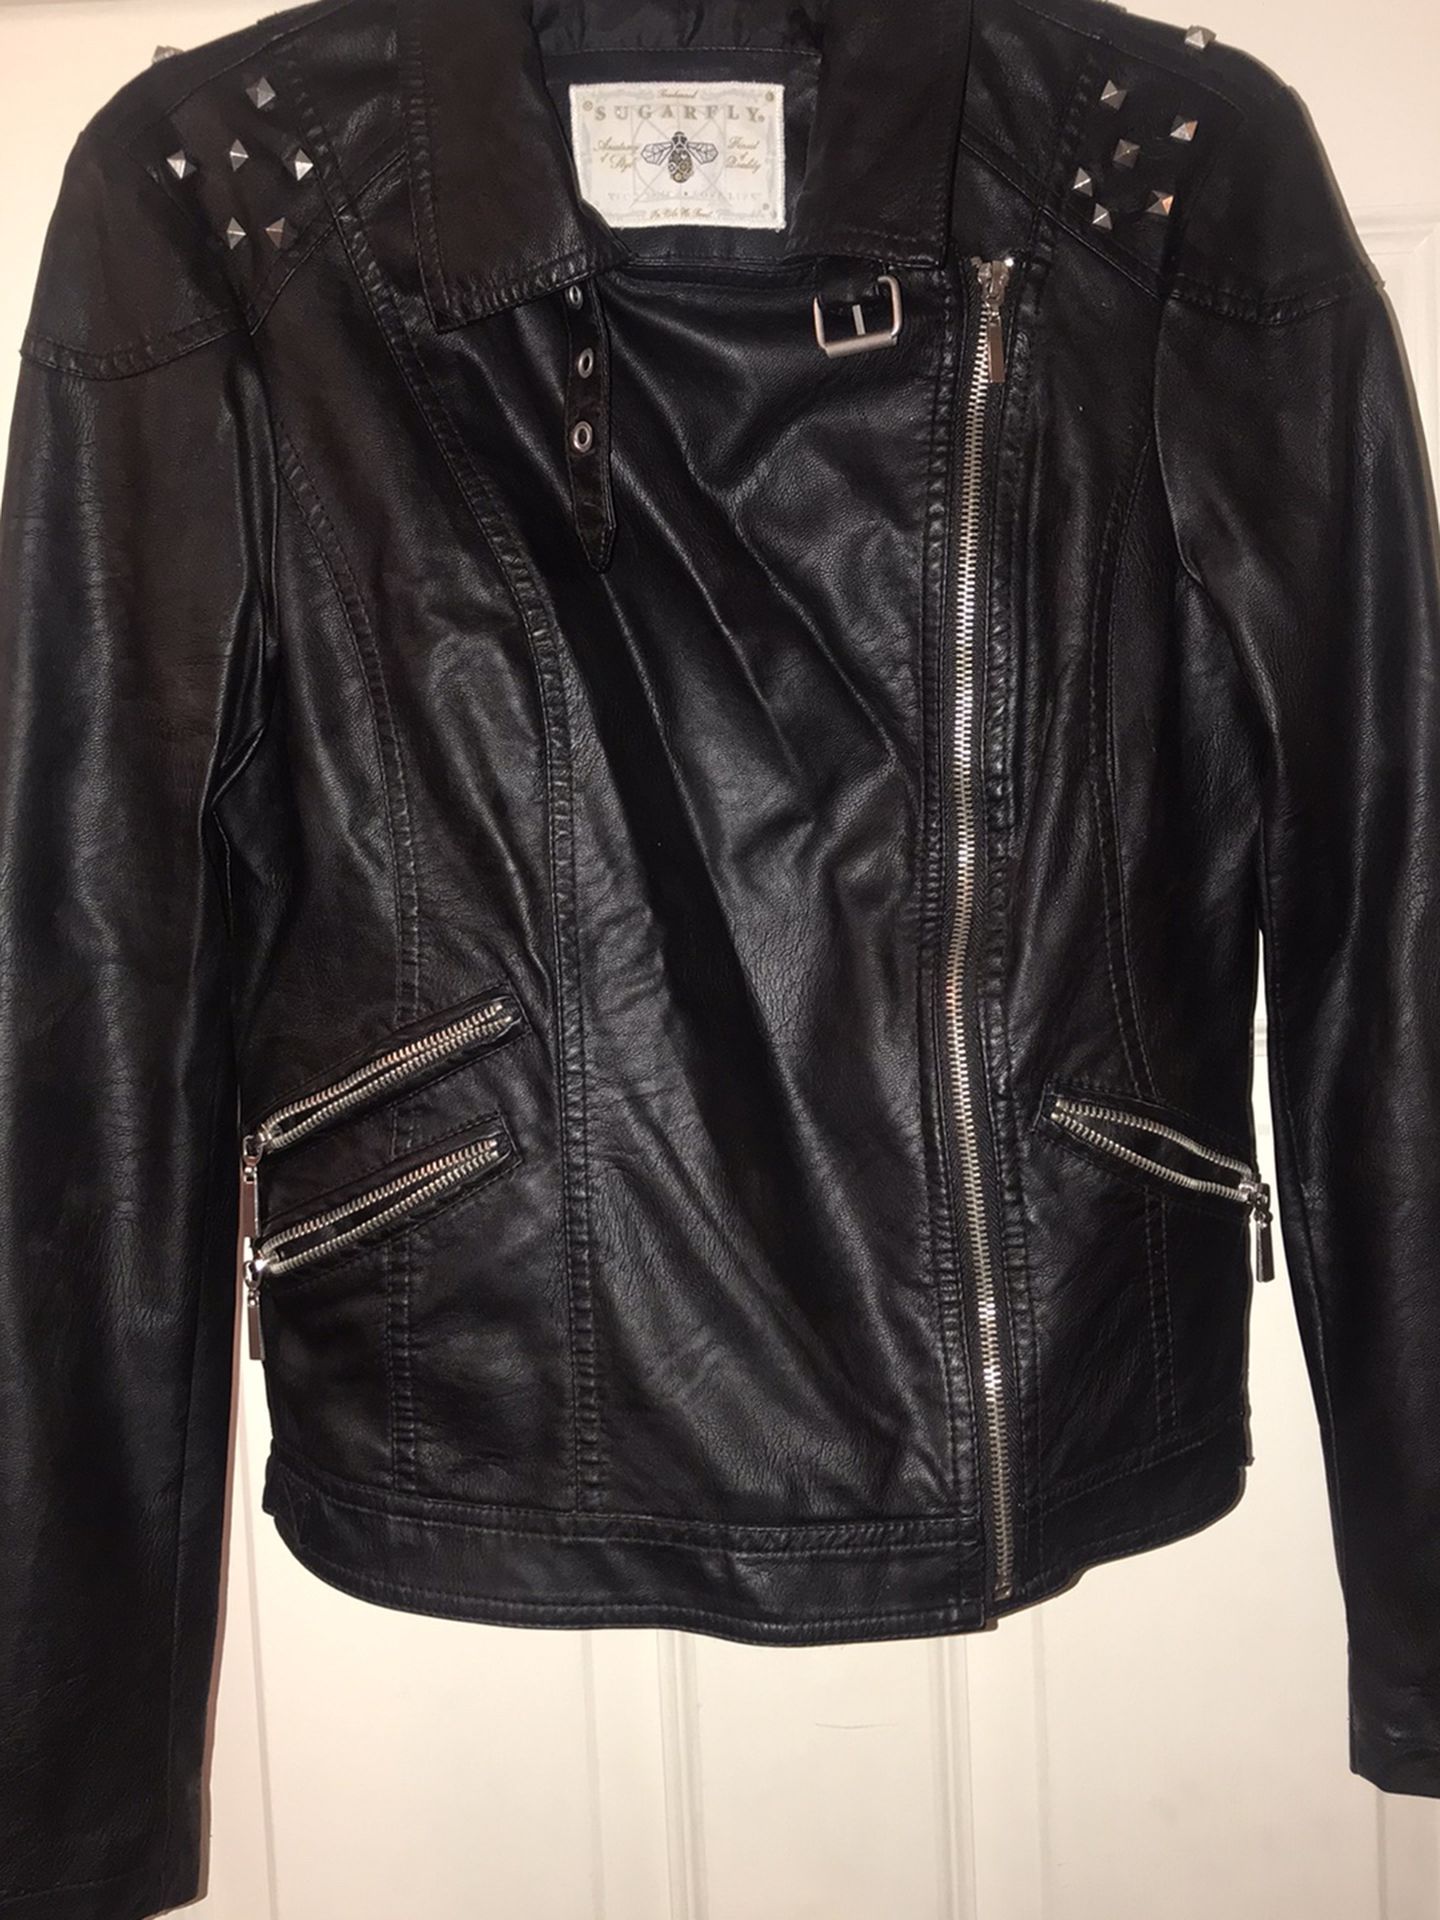 Sugarfly Black Faux Leather Jacket Size M